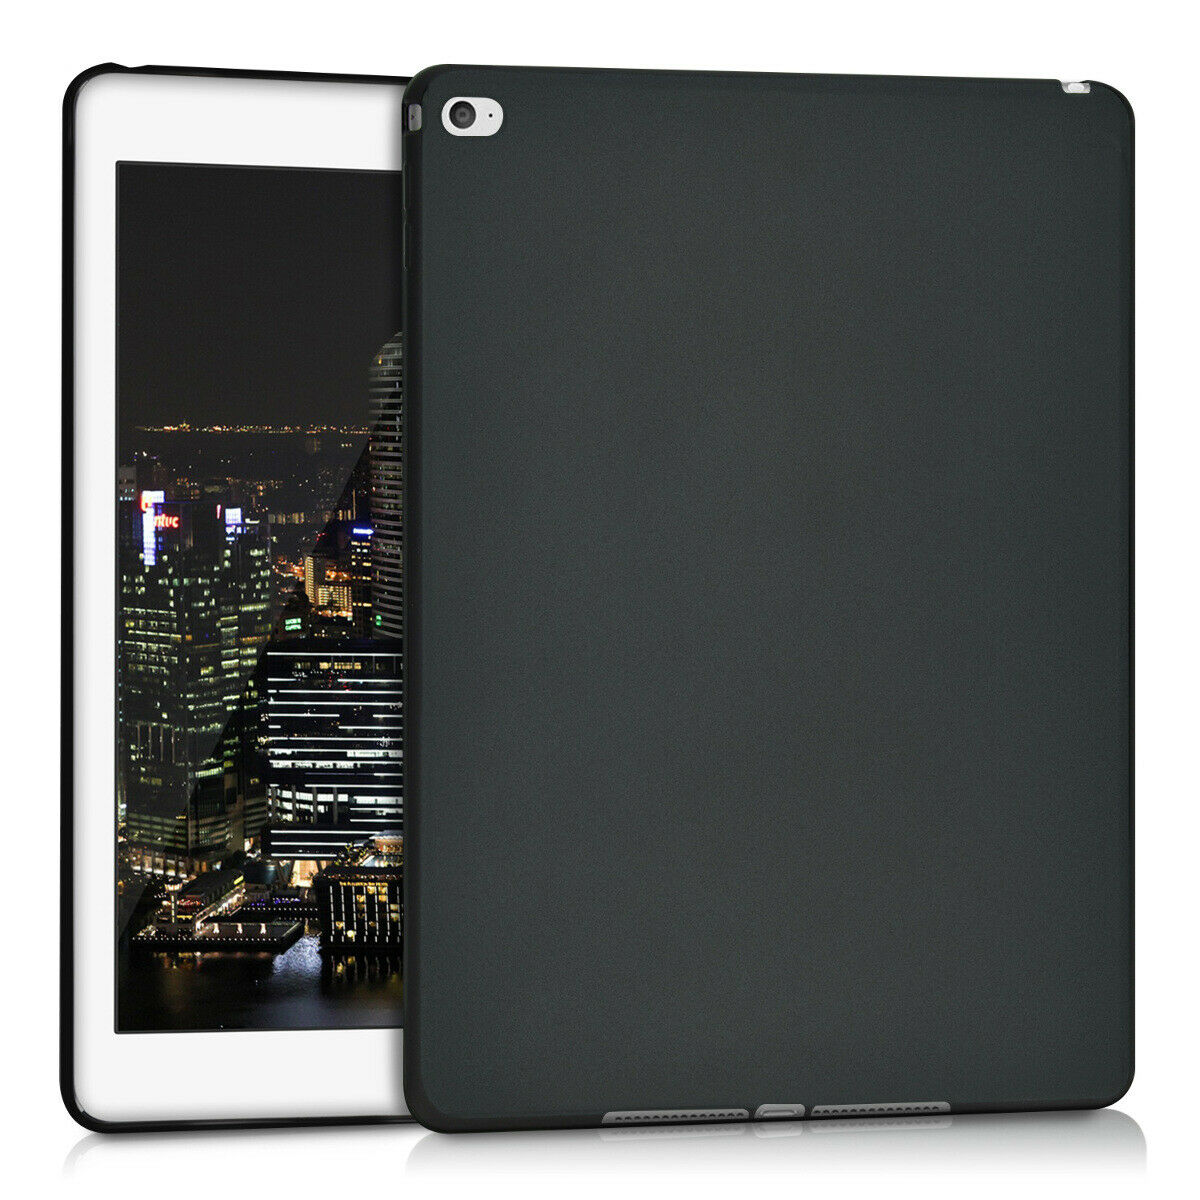 Pouzdro GEL pro Apple iPad Air 2 černé